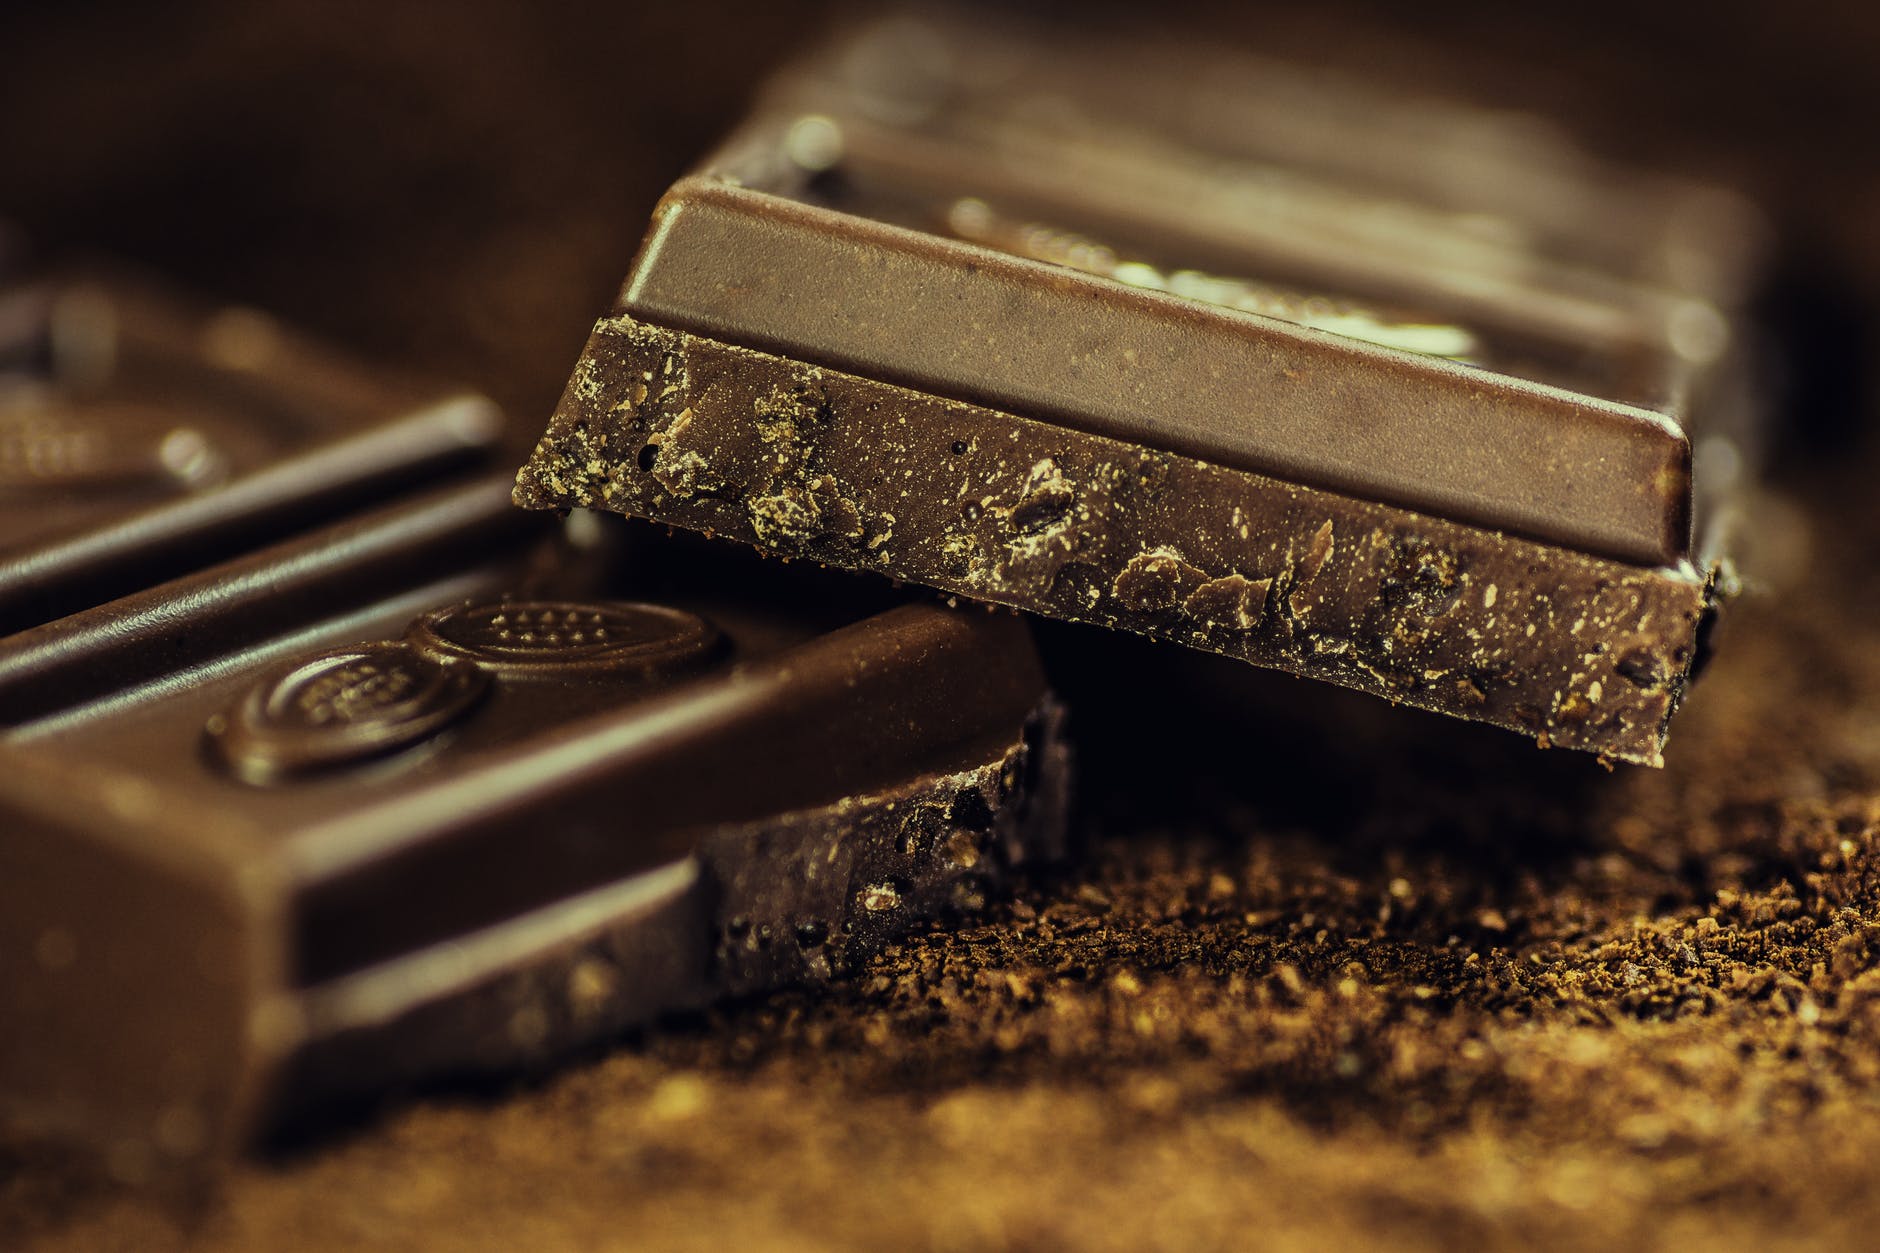 Coffee dark candy chocolate - Dark chocolate has multiple benefits for runners.
